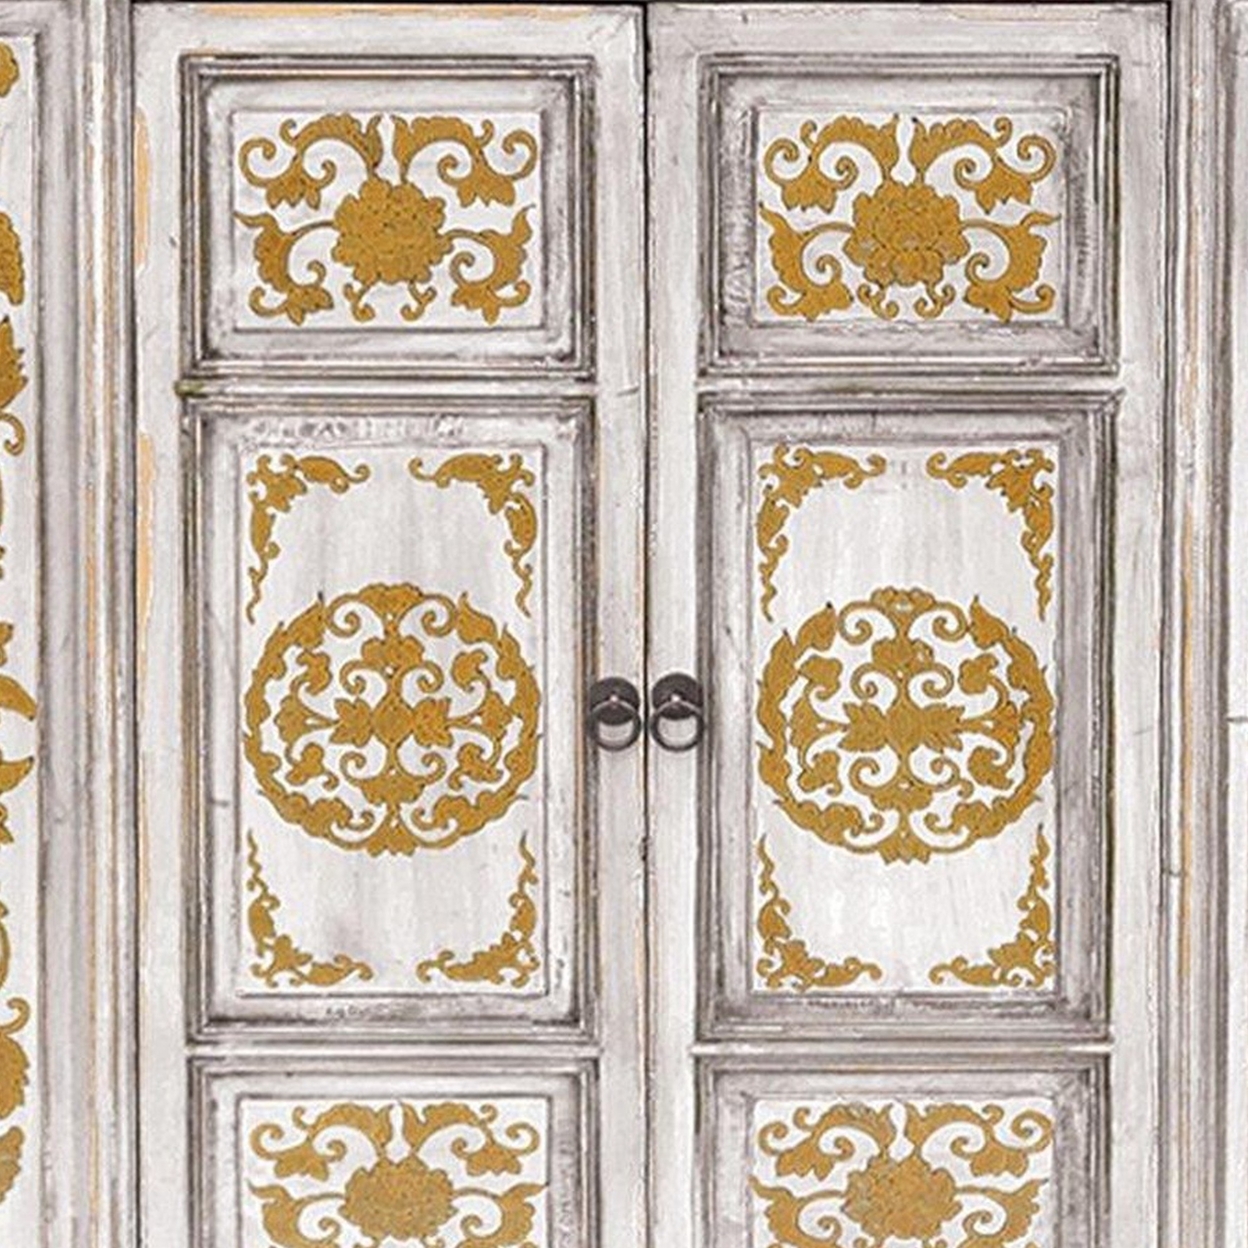 Florentine 43 Inch Sideboard Buffet Cabinet, 2 Doors, Gold White Hardwood- Saltoro Sherpi